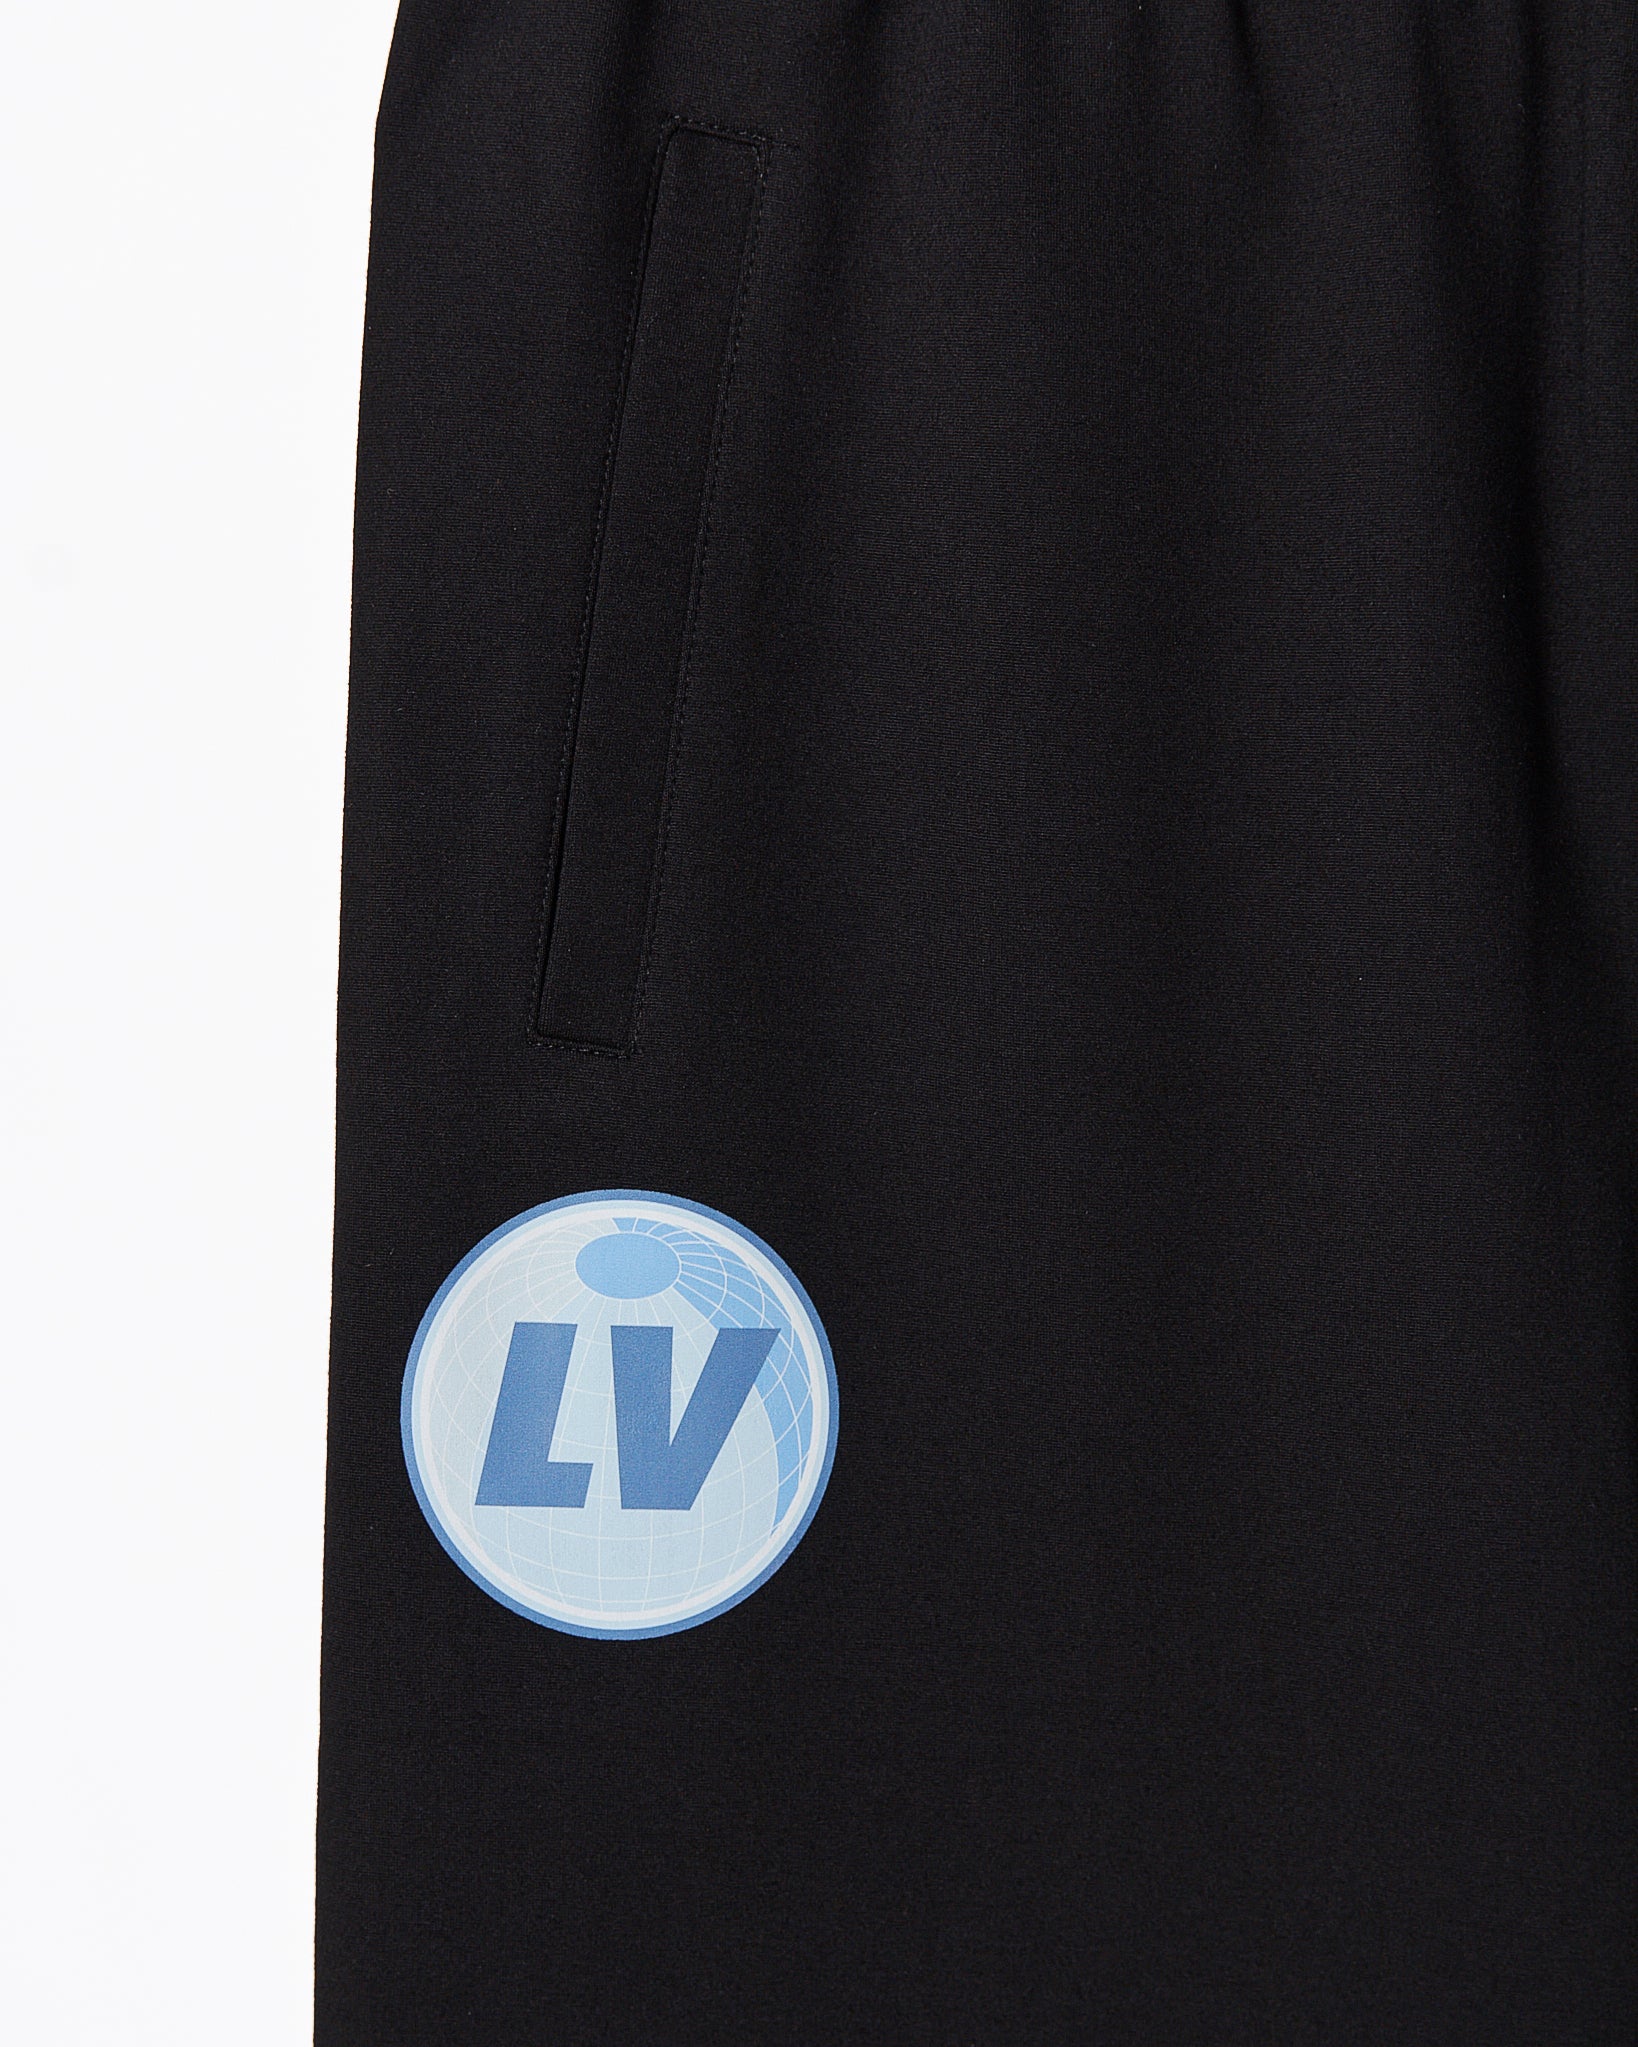 LV Cloudy Logo Printed Black Joggers 68.90